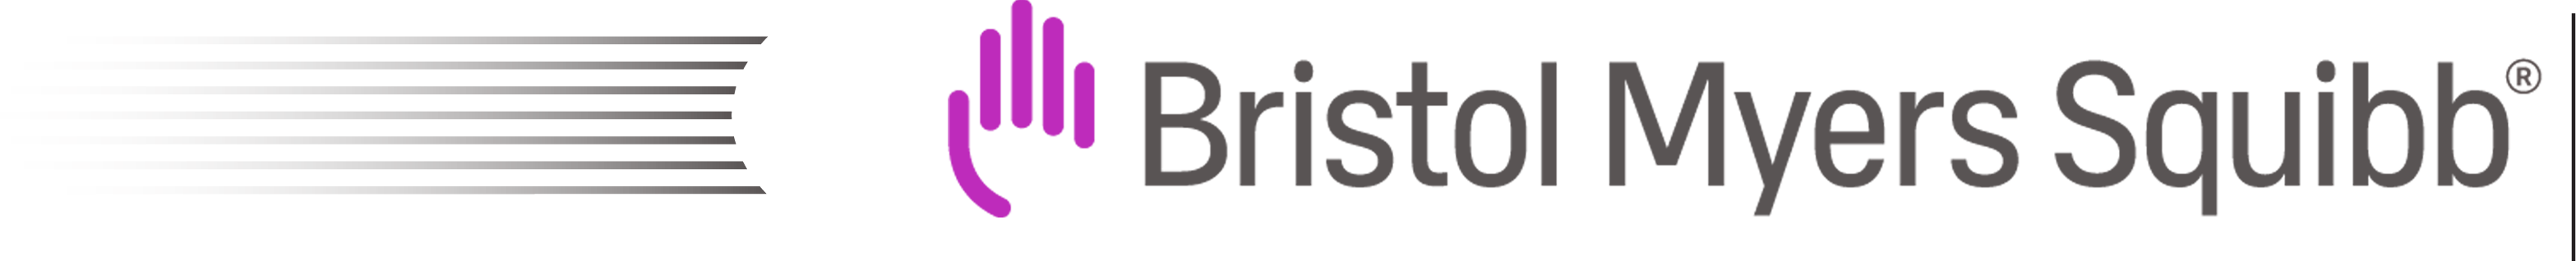 Bristol-Myers Squibb Banner